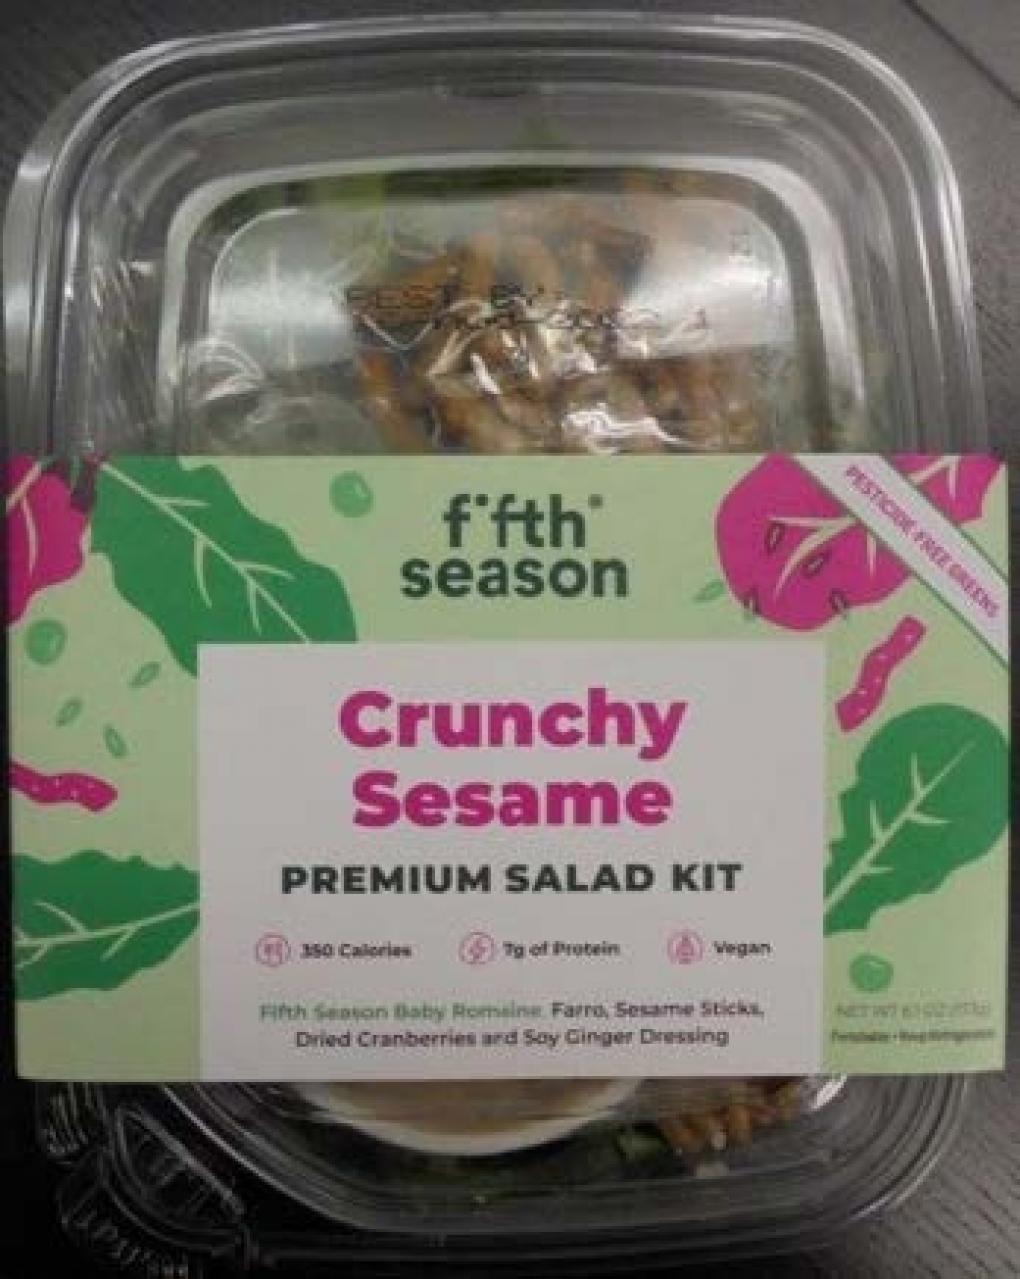 RECALL: Fifth Season Crunchy Sesame Salad Kit